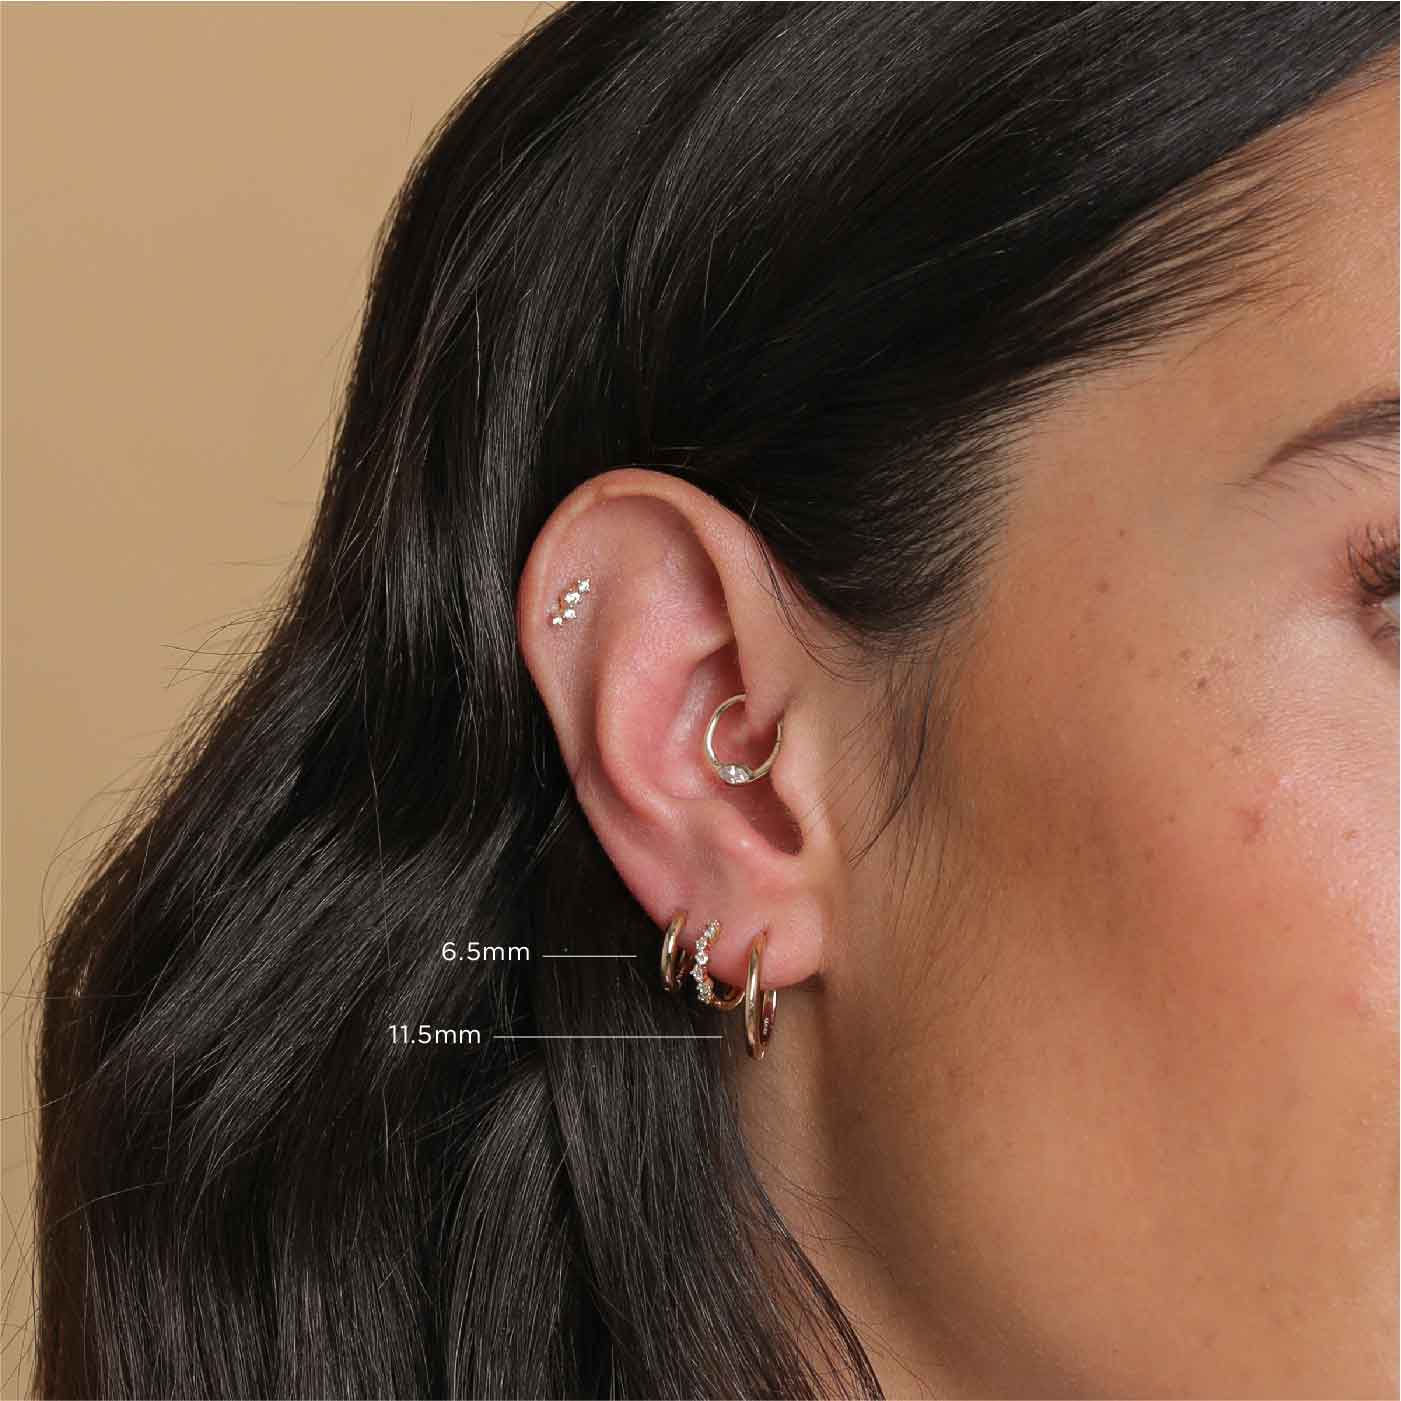 14k White Gold Celtic Cartilage Earring Gold Helix Piercing  Etsy  Coole  ohrlöcher Piercings ohr Cartilagoohrringe